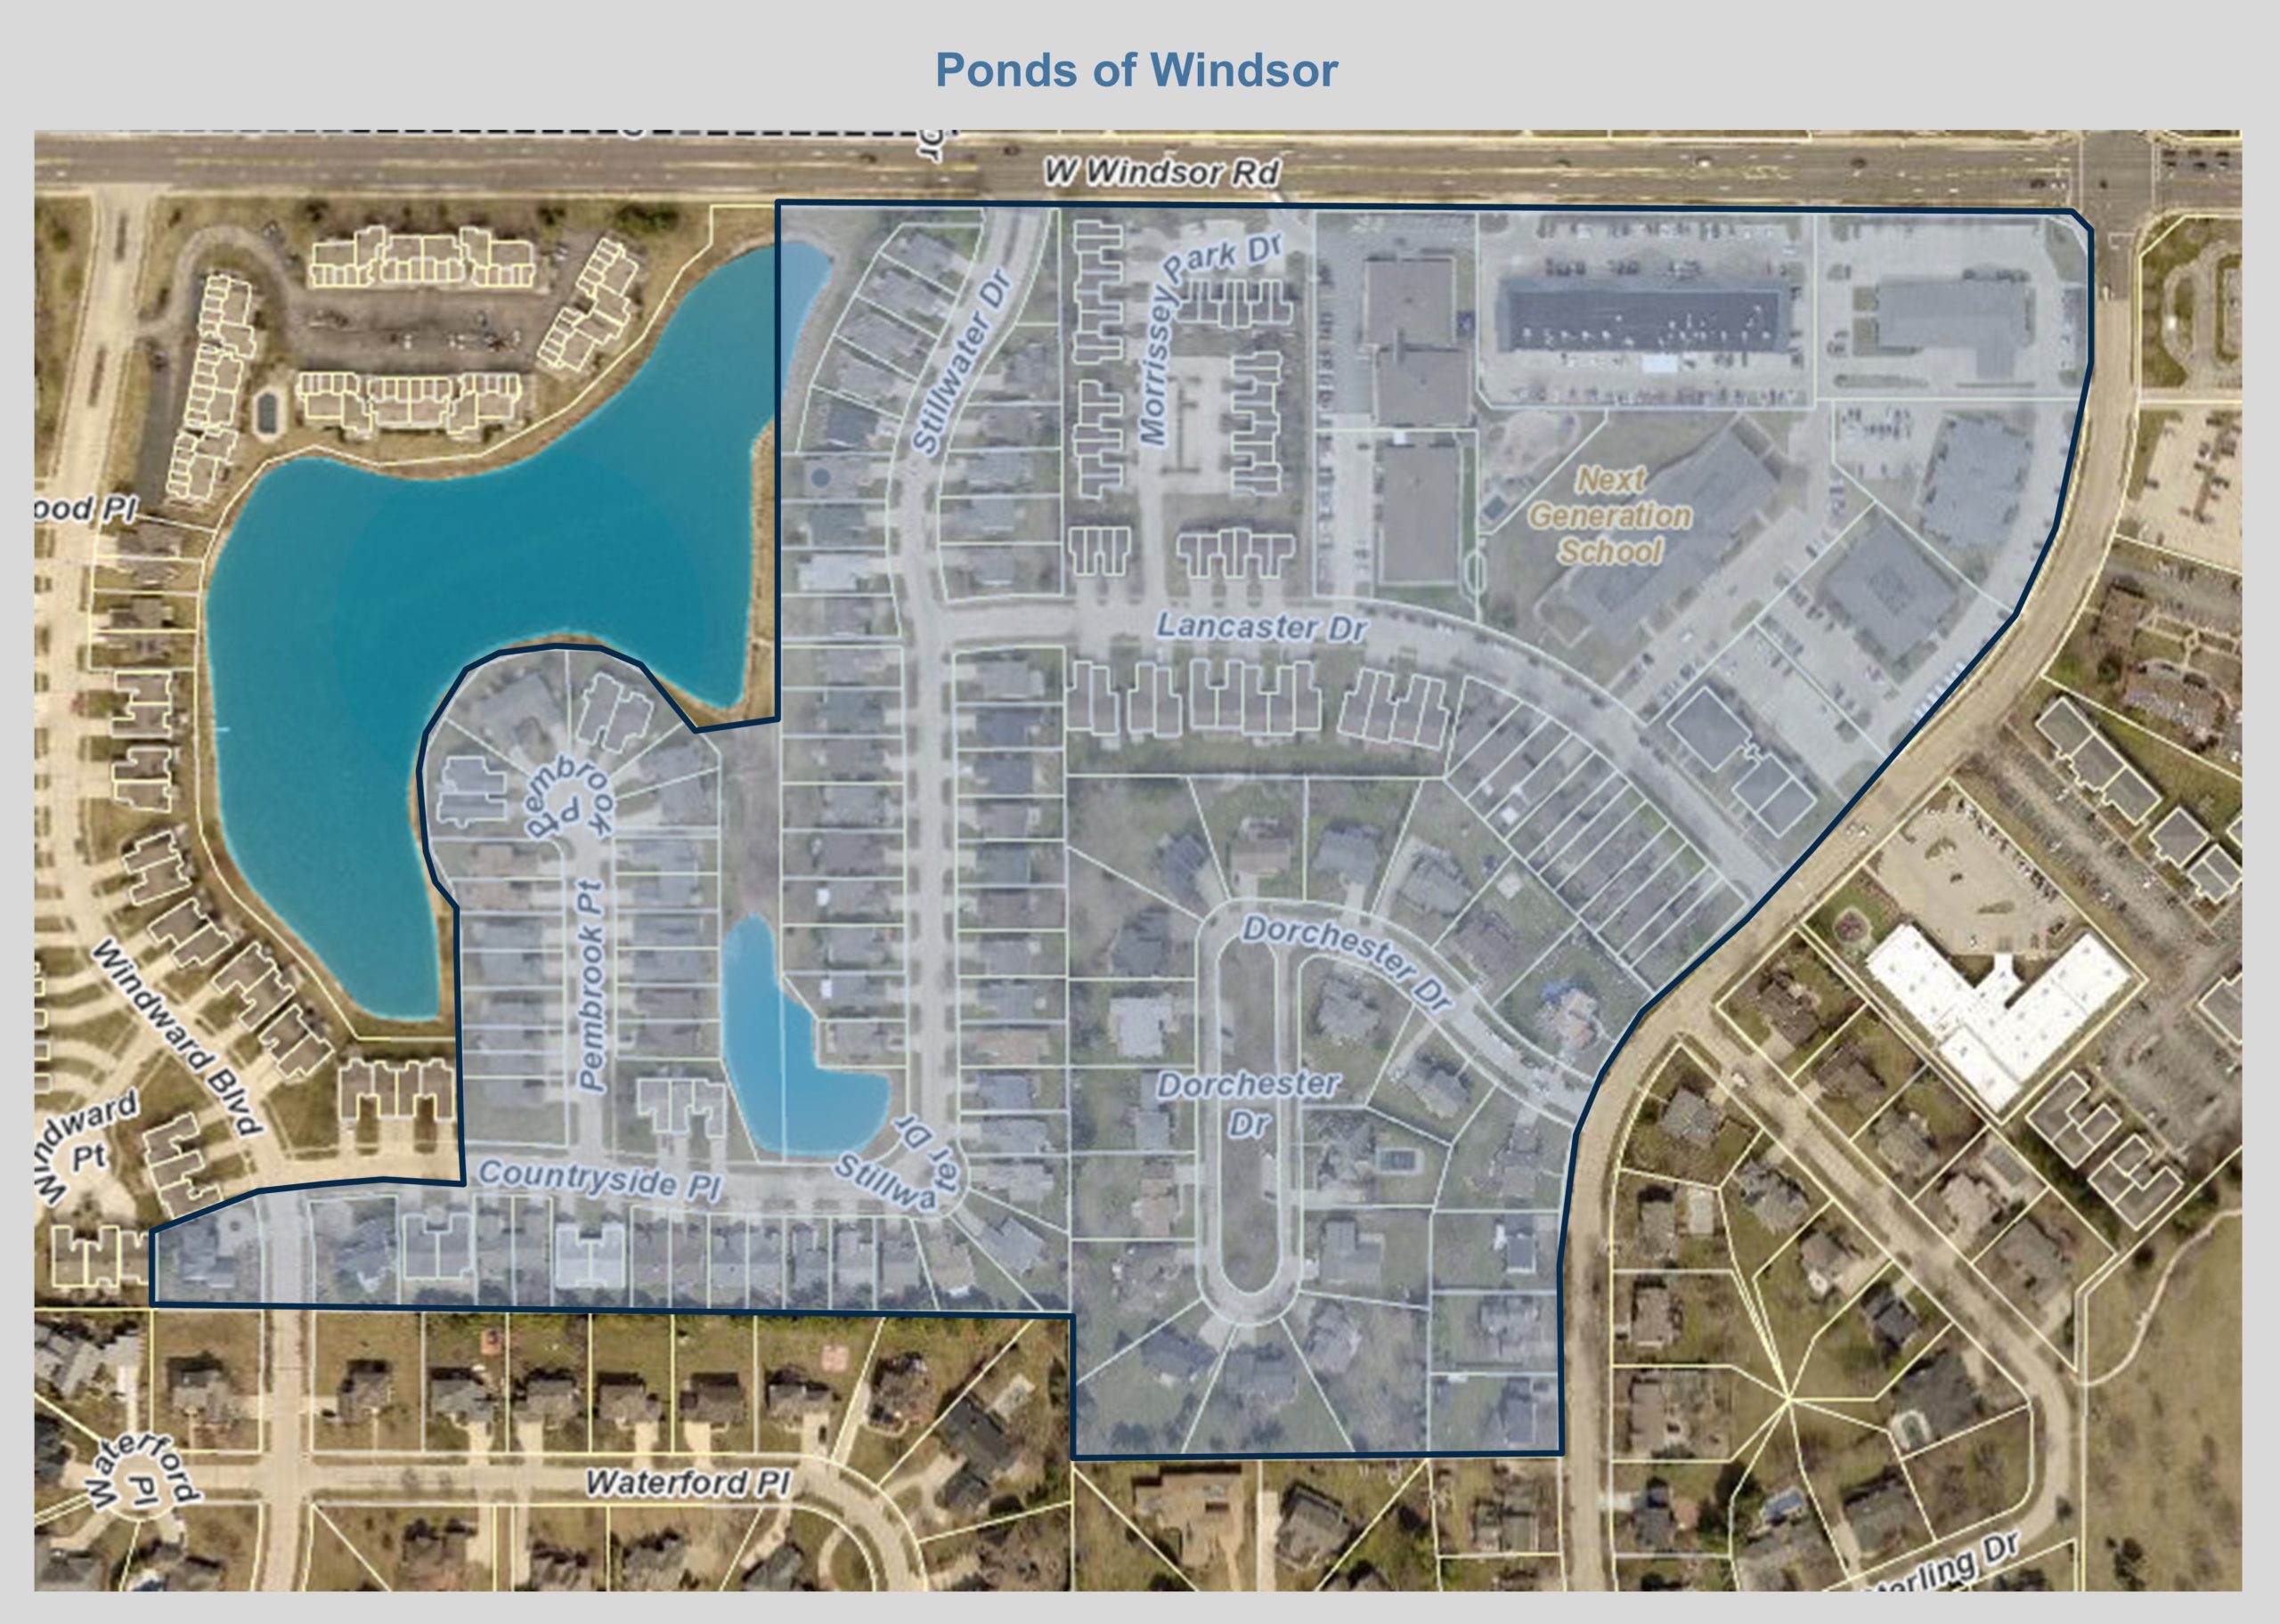 Ponds of Windsor HOA Boundaries Map